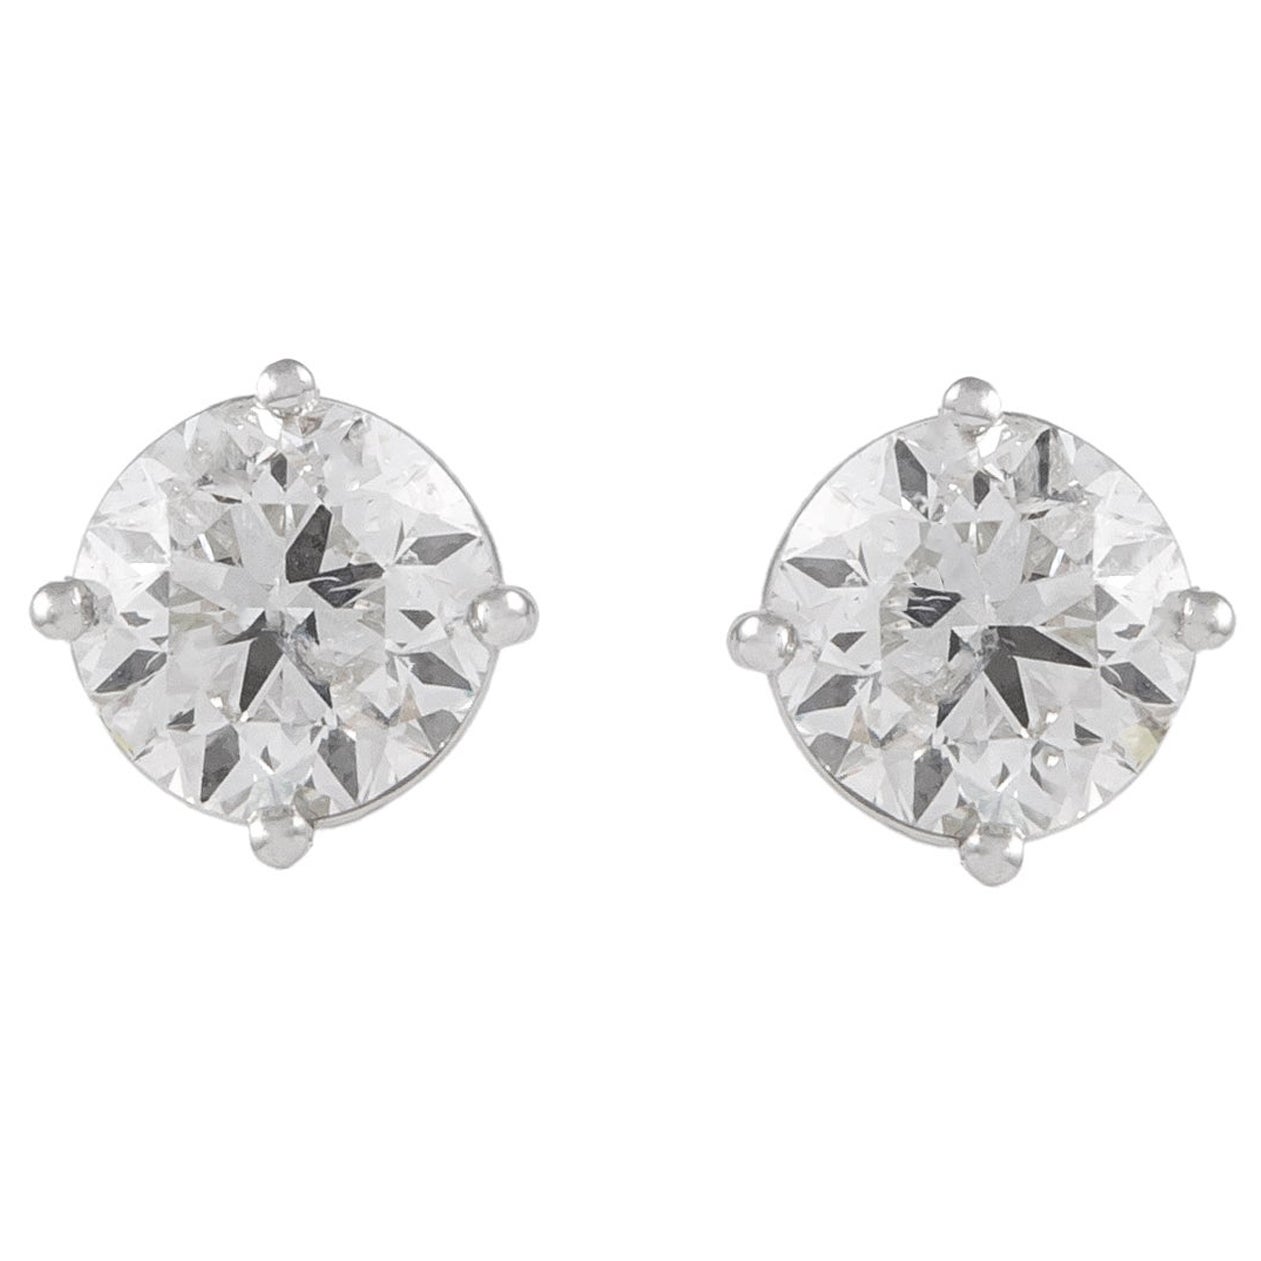 Alexander EGL Certified 2.02 Carat Diamond Stud Earrings 18k White Gold